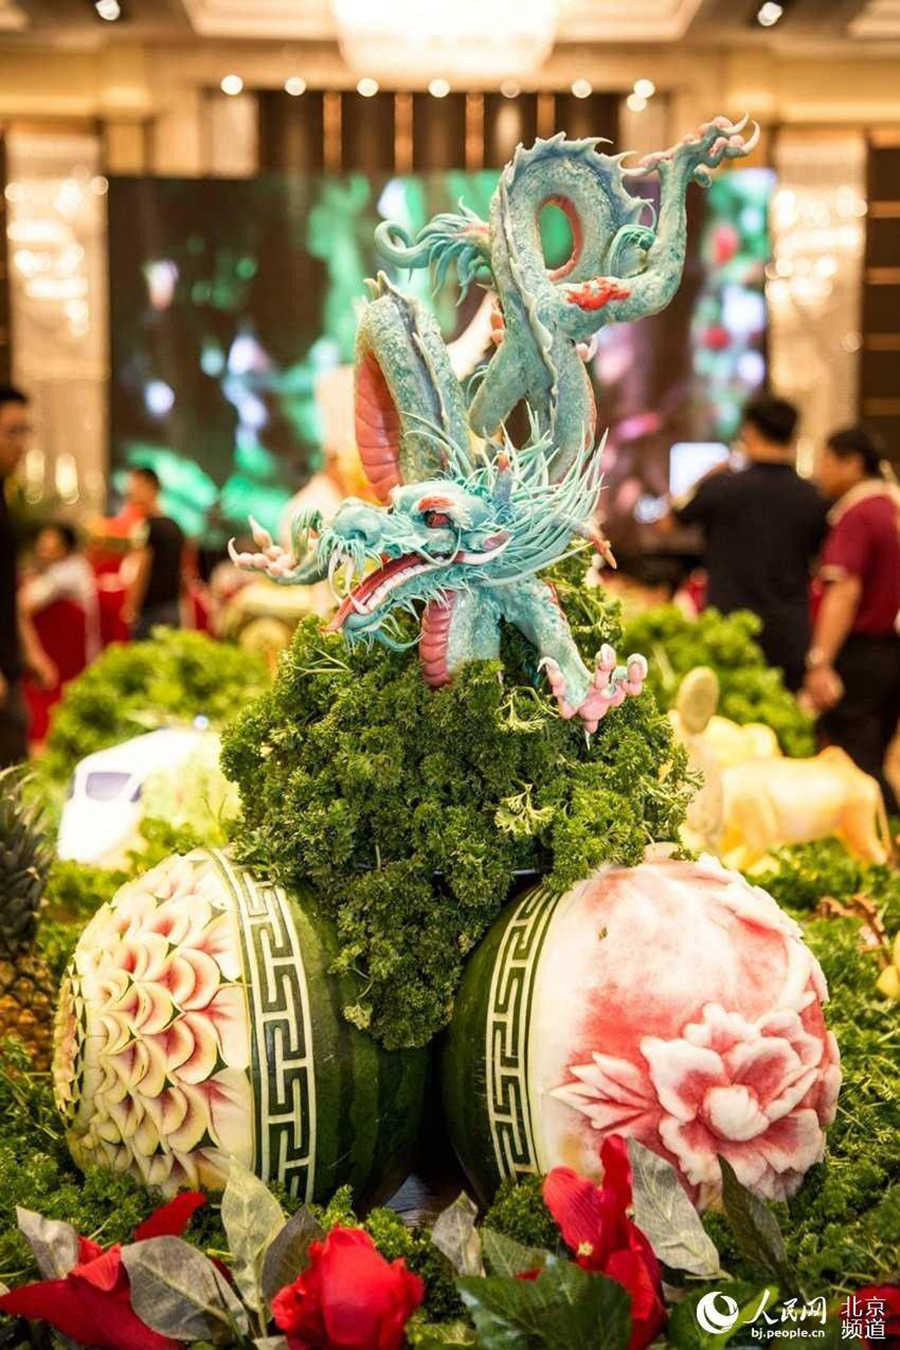 Beijing festival-goers get creative with watermelon